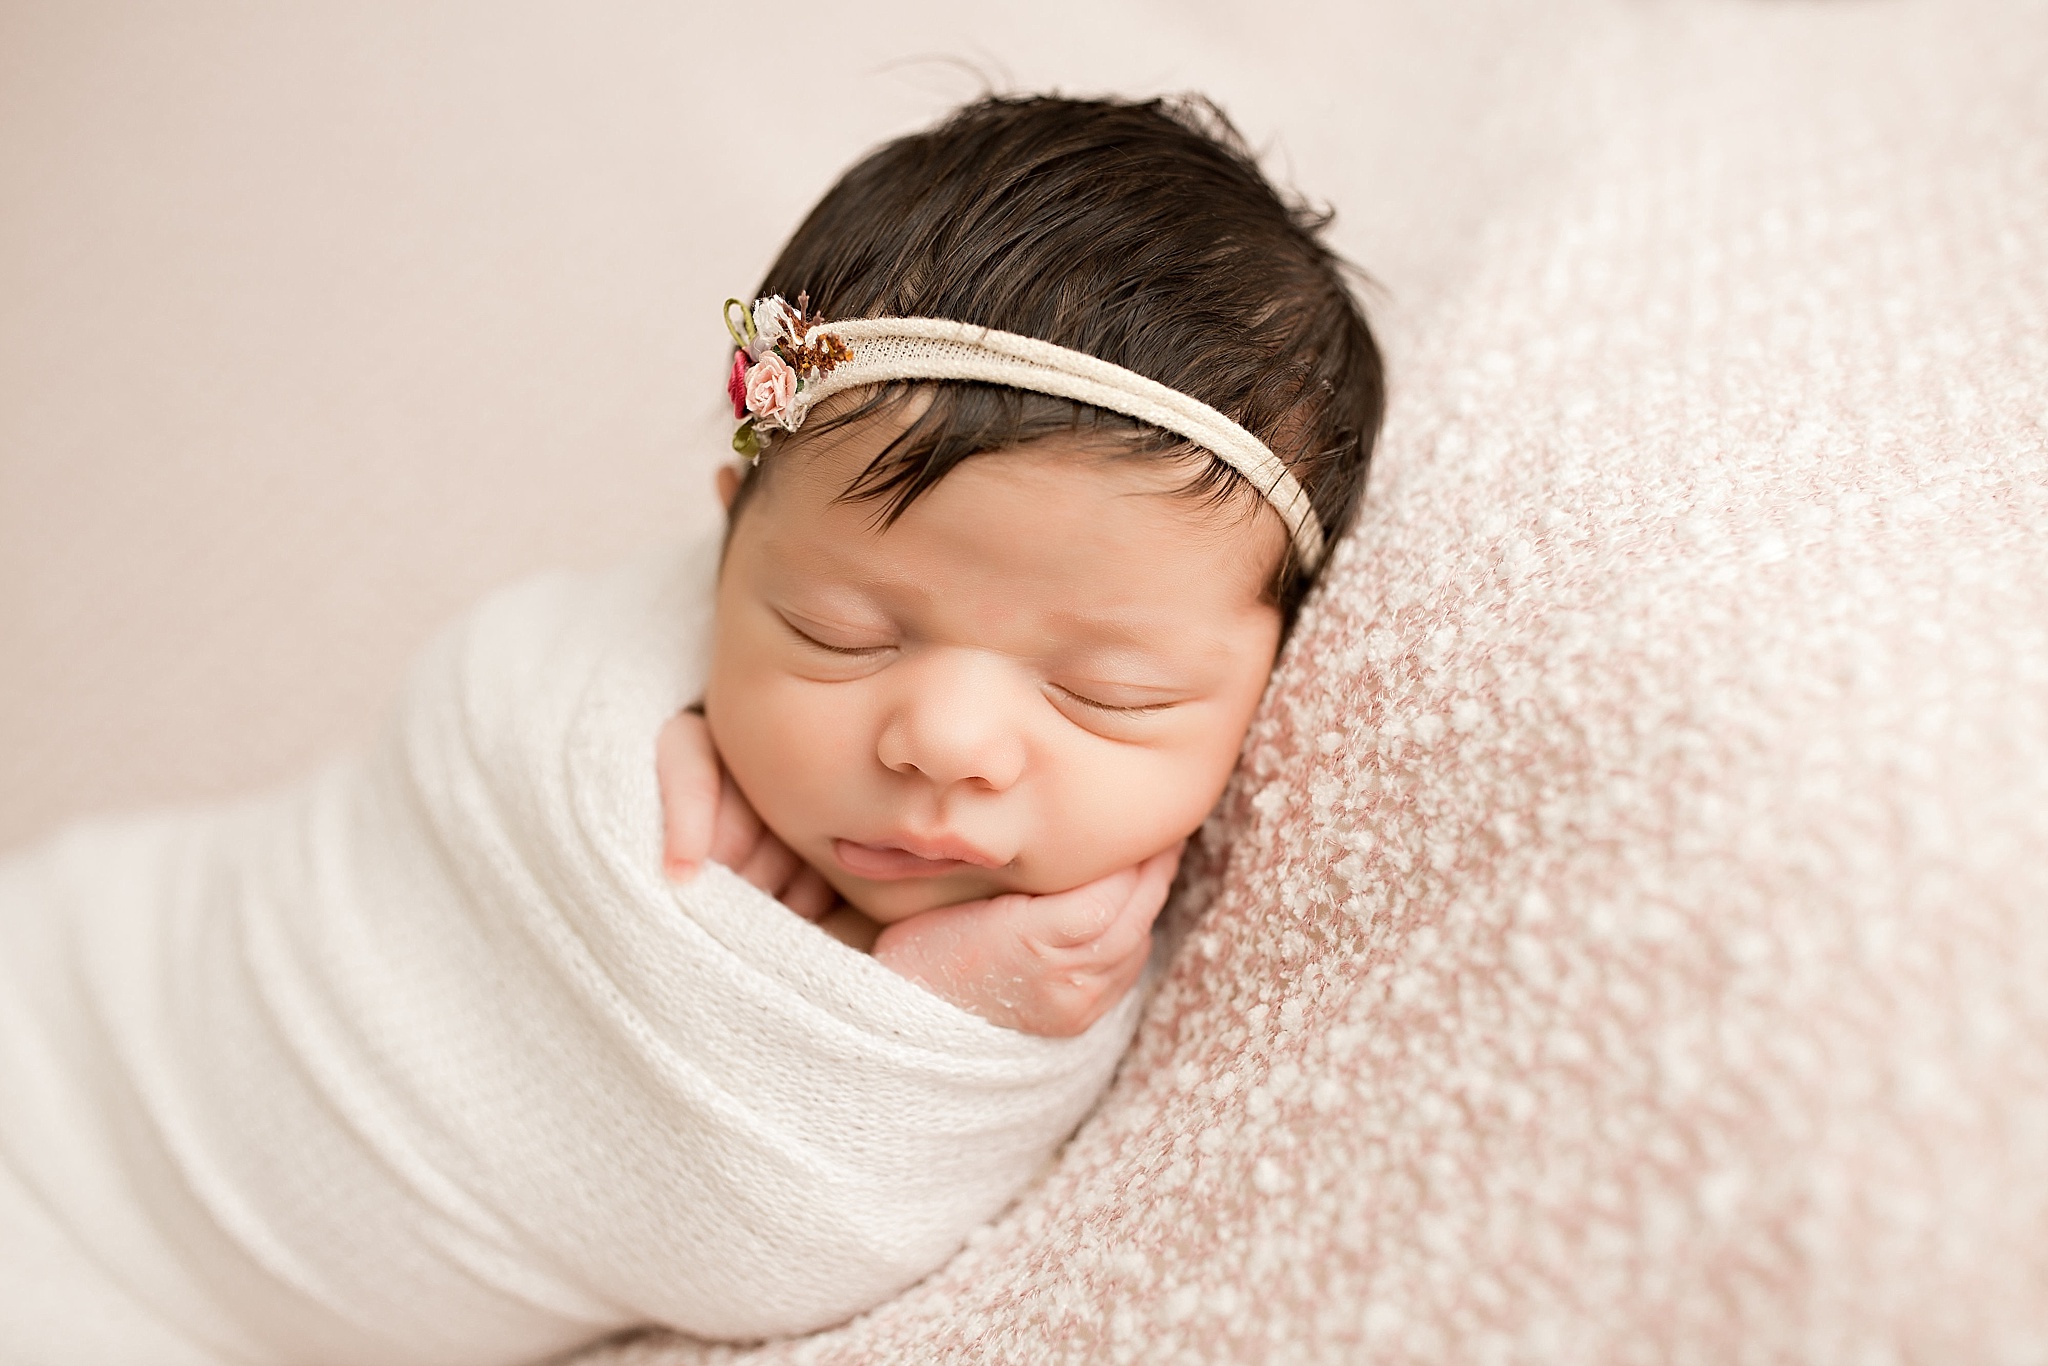 newborn baby girl sleeping with floral headband